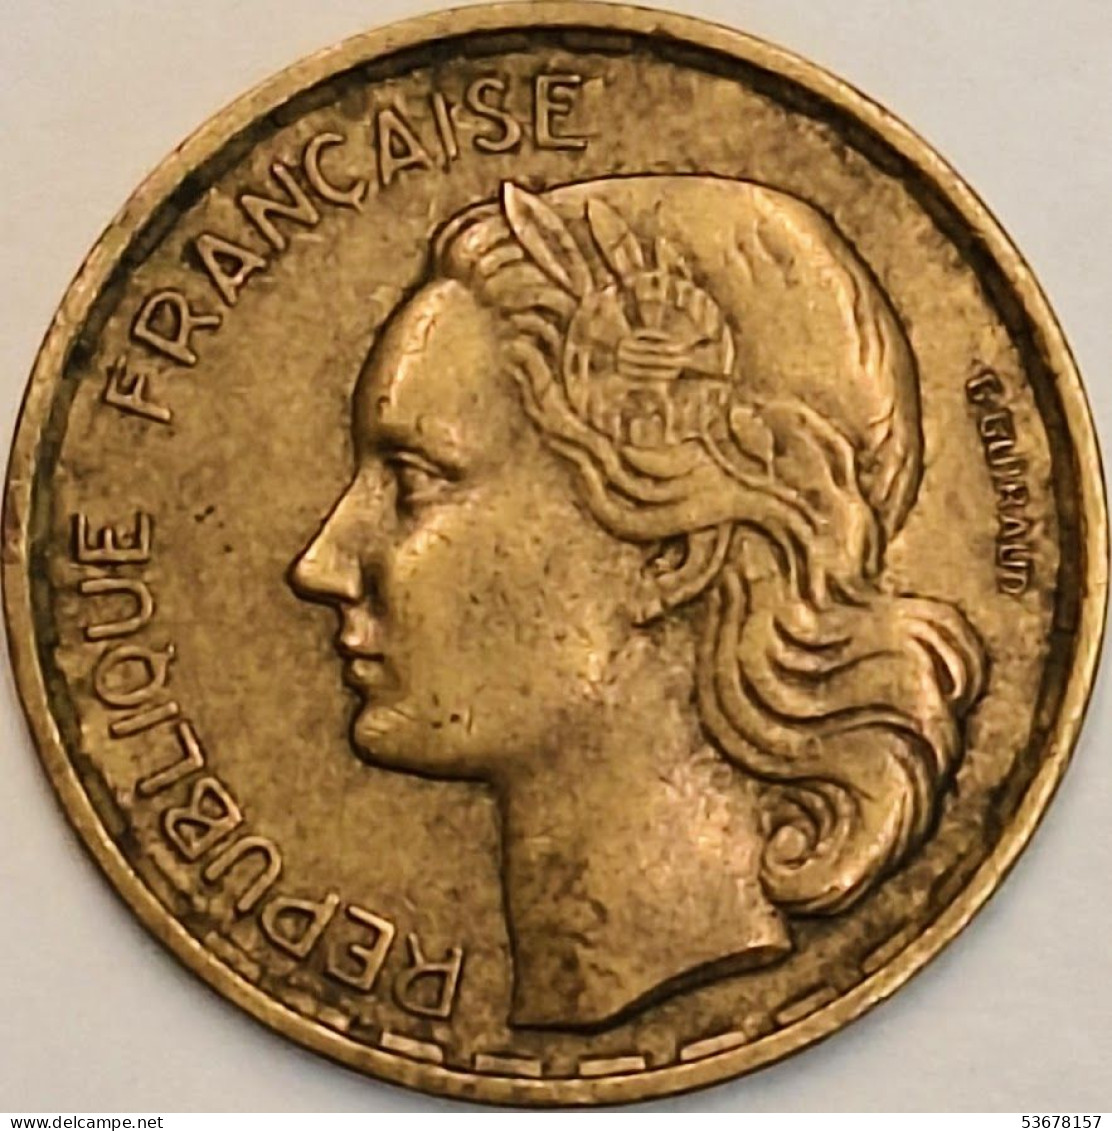 France - 20 Francs 1951 (4 Plumes), KM# 917.1 (#4156) - 20 Francs